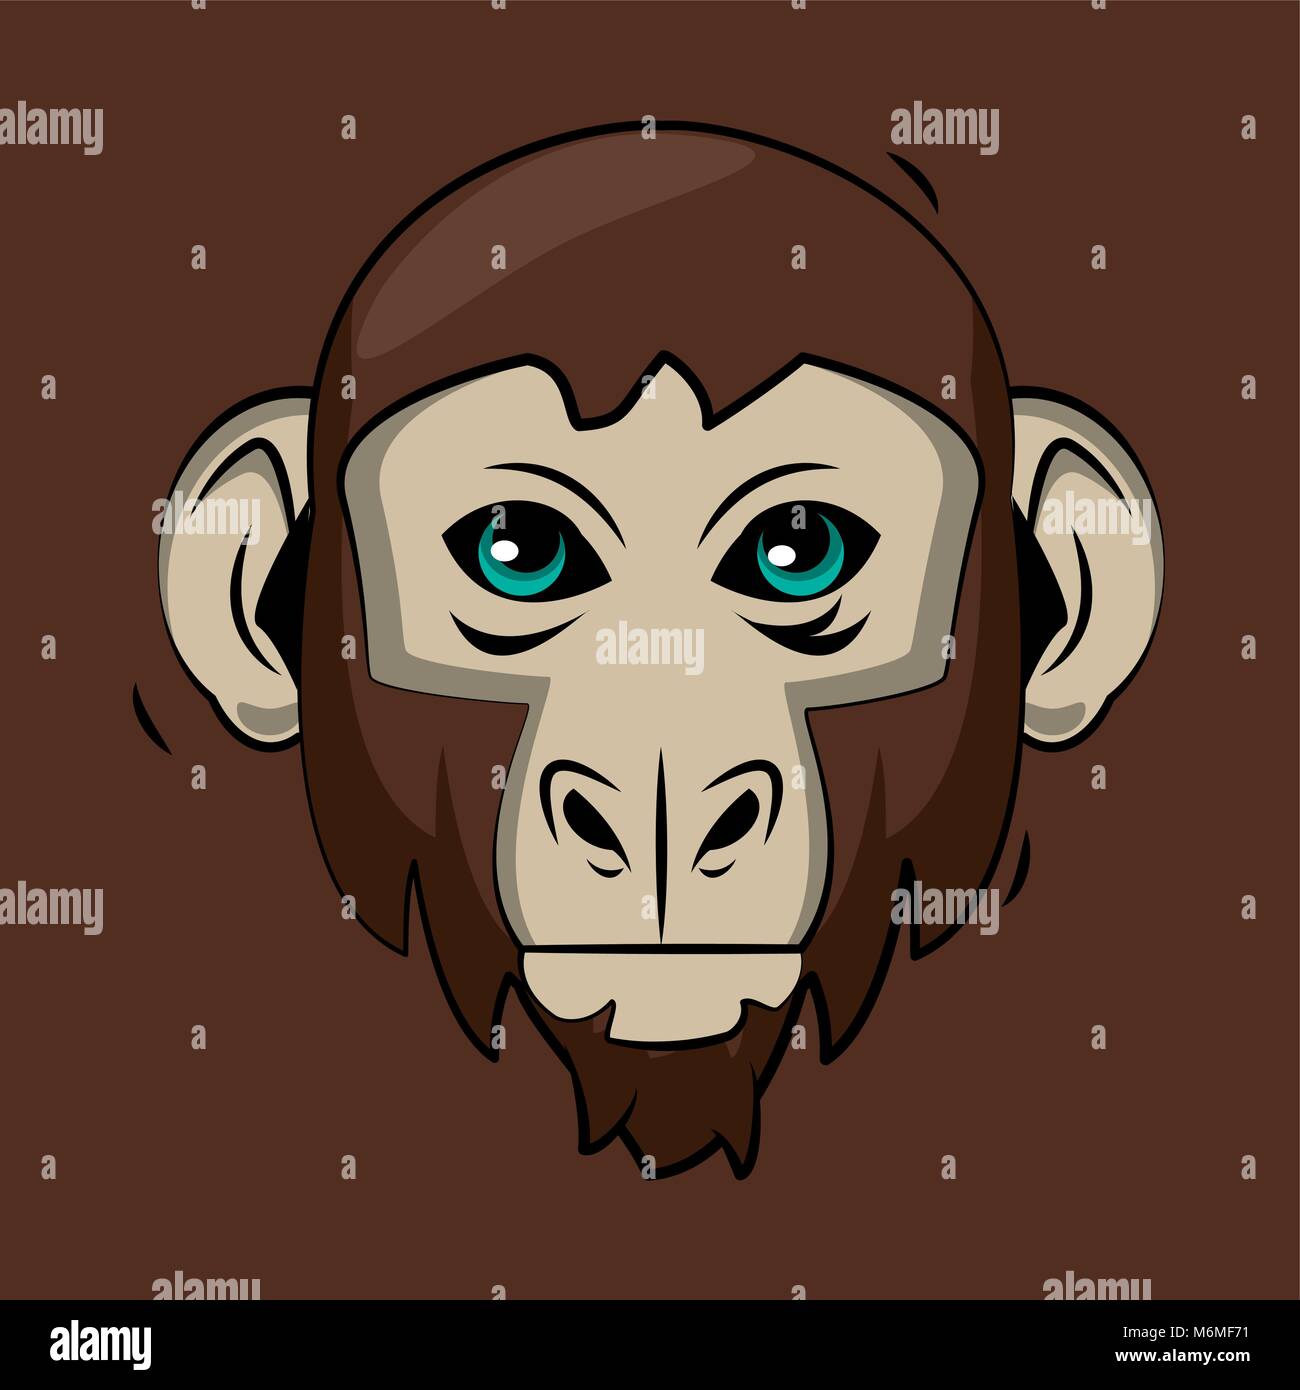 Monkey cartoon print for t shirt Stock Vector